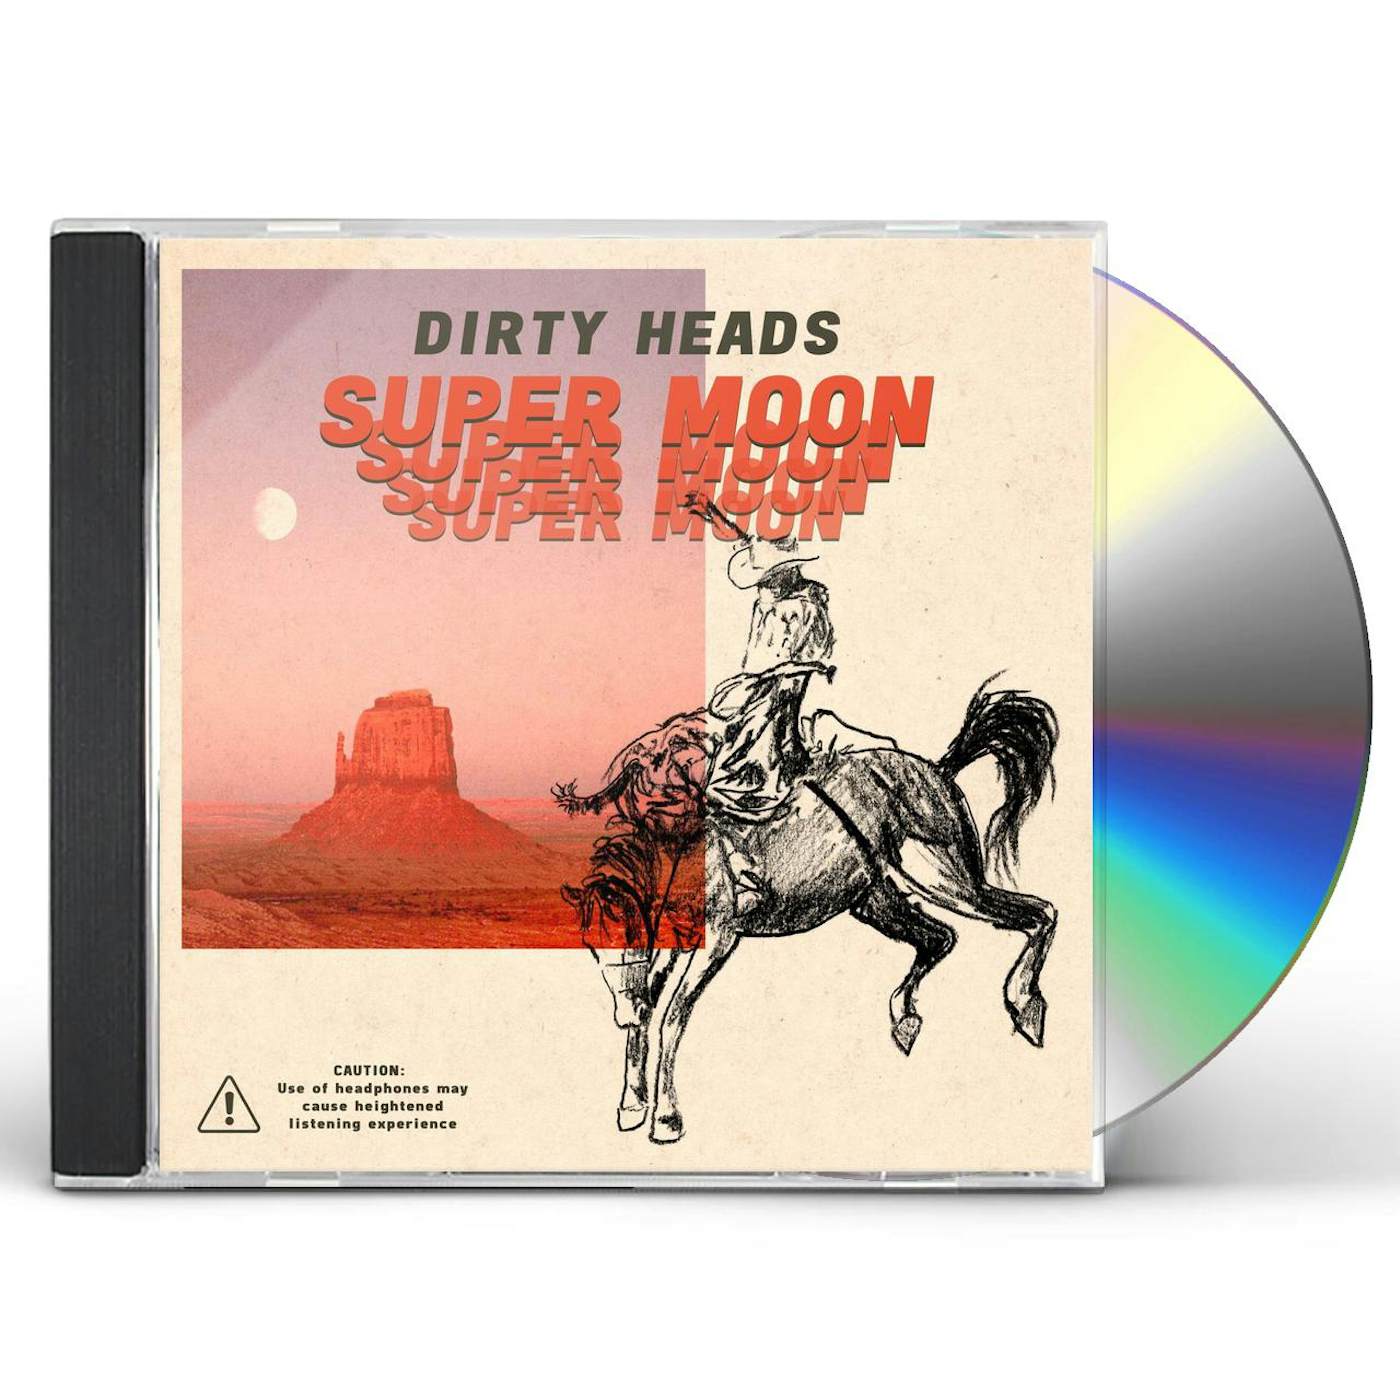 Dirty Heads SUPER MOON CD